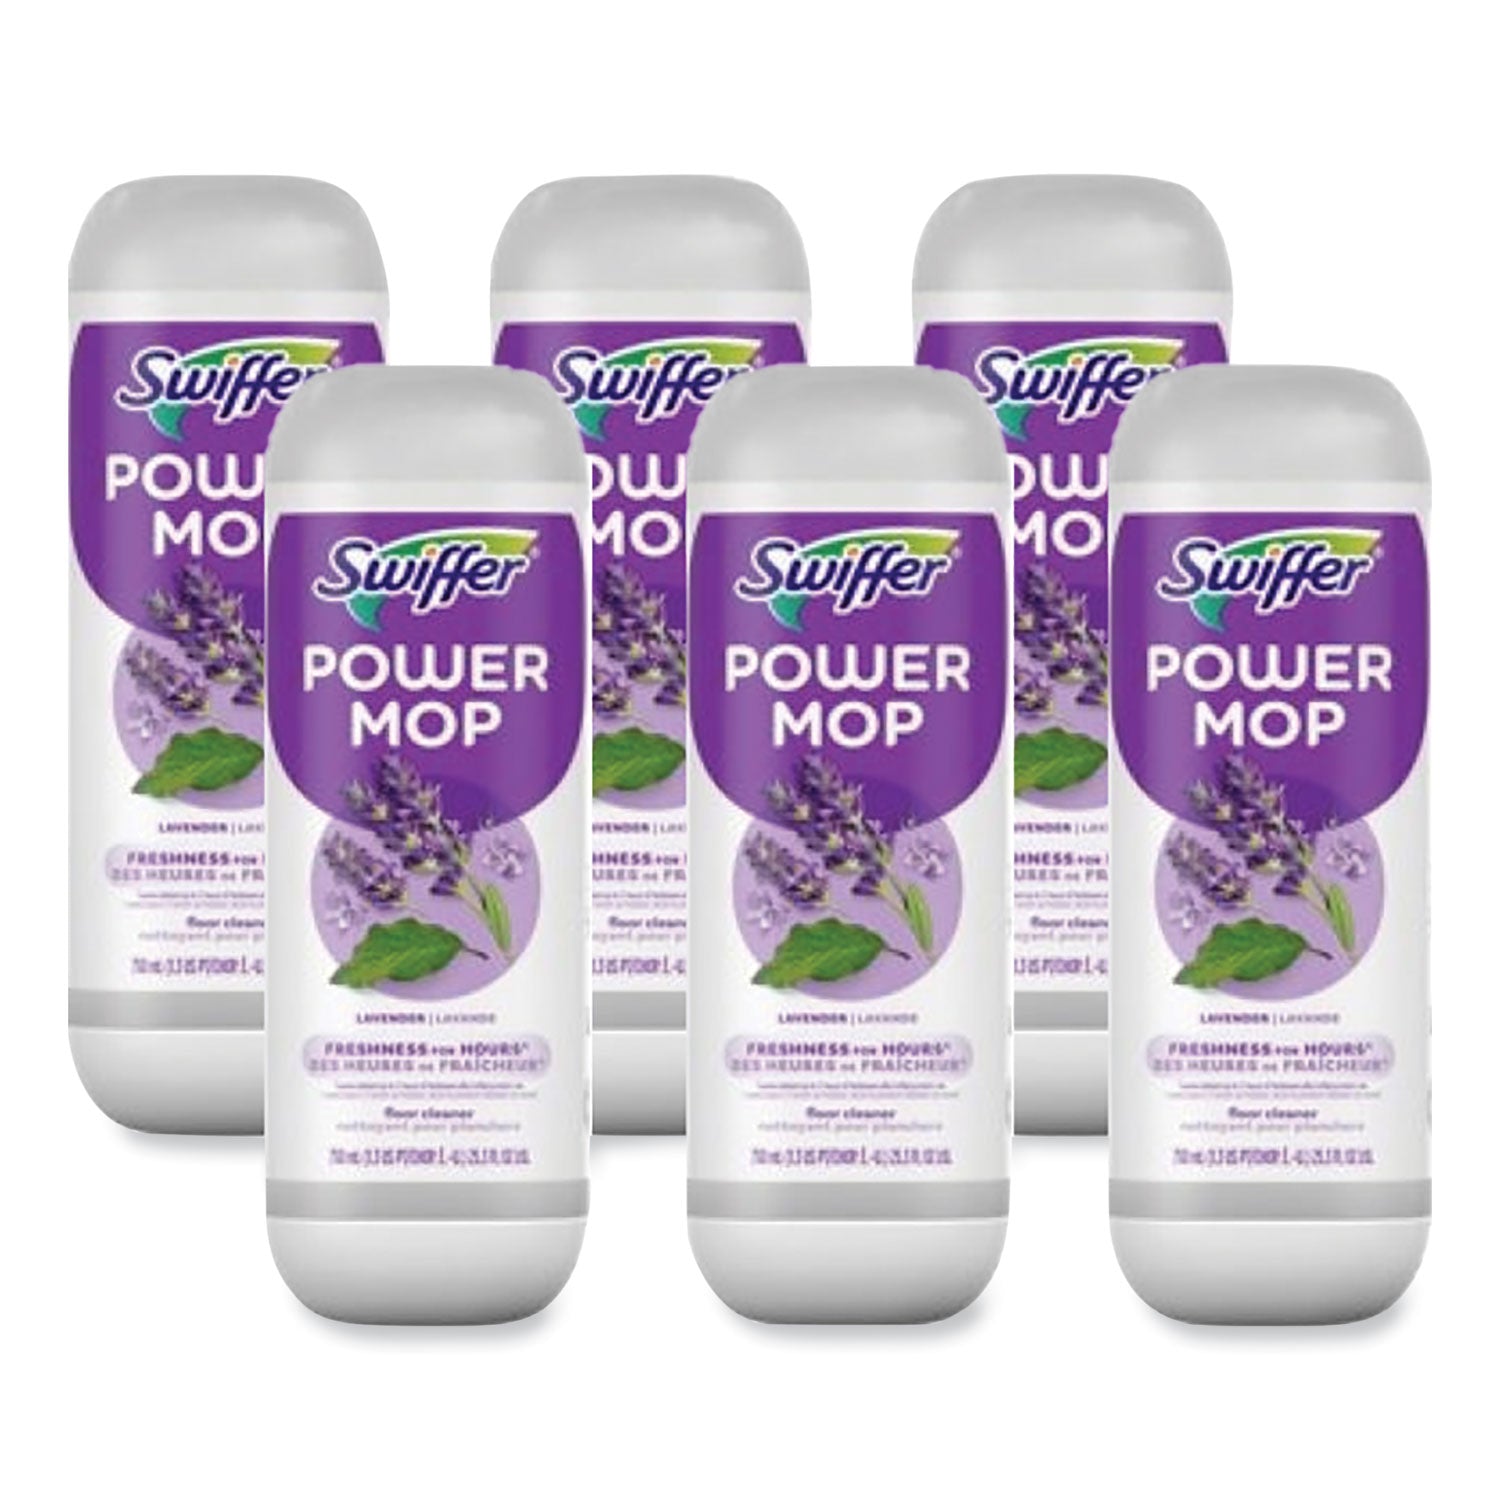 powermop-refill-cleaning-solution-lavender-scent-253-oz-refill-bottle-6-carton_pgc08421 - 1